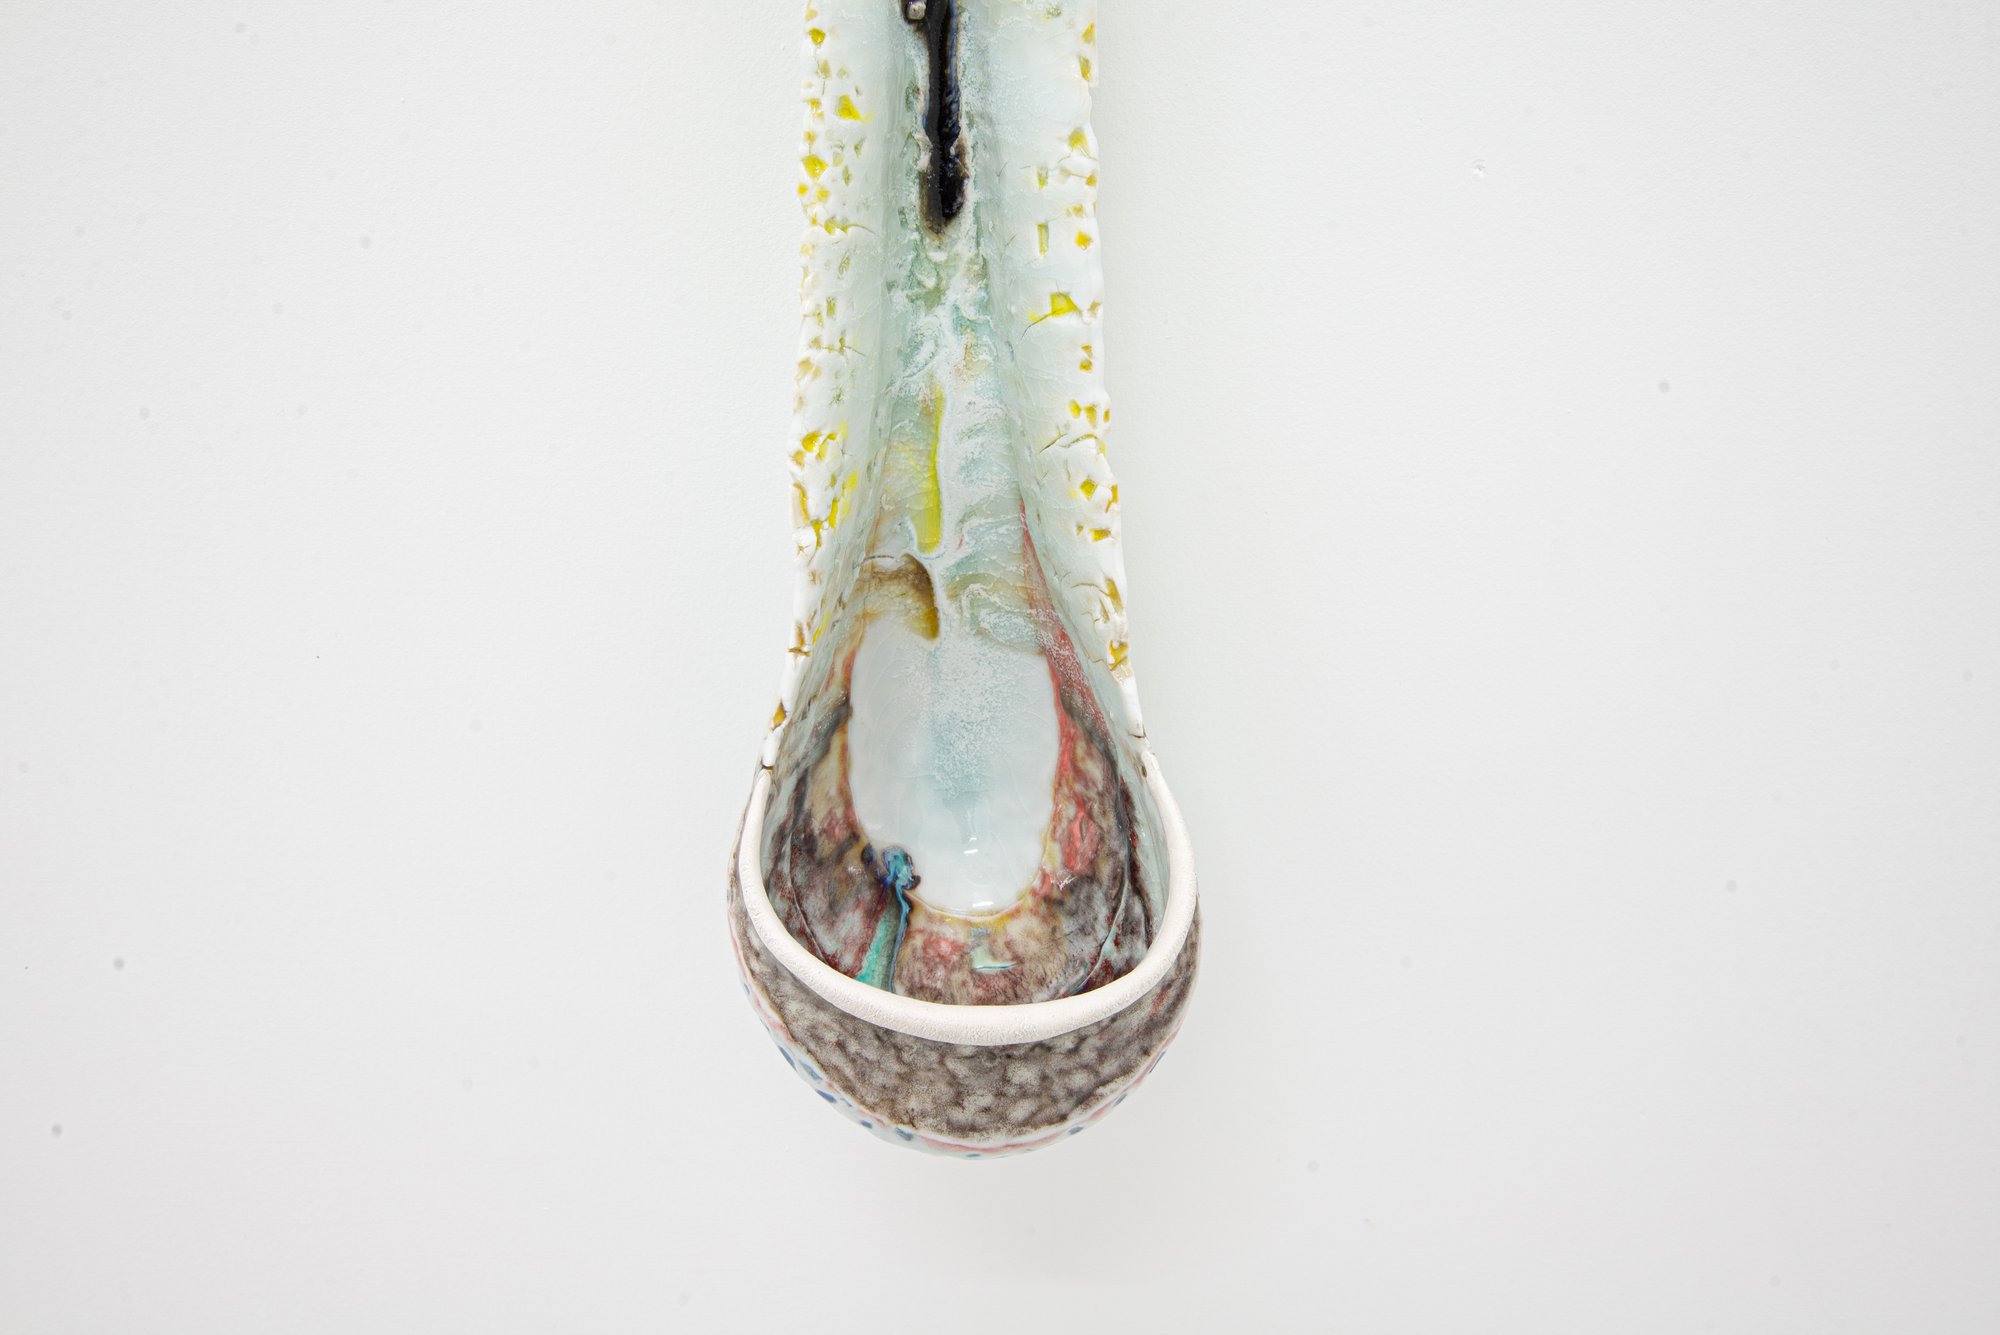 Kentaro Kawabata, Spoon, detail, porcelain, glass, slag, silver, platinum, 53 x 9 x 9 cm (20 7/8 x 3 1/2 x 3 1/2 in), 2022